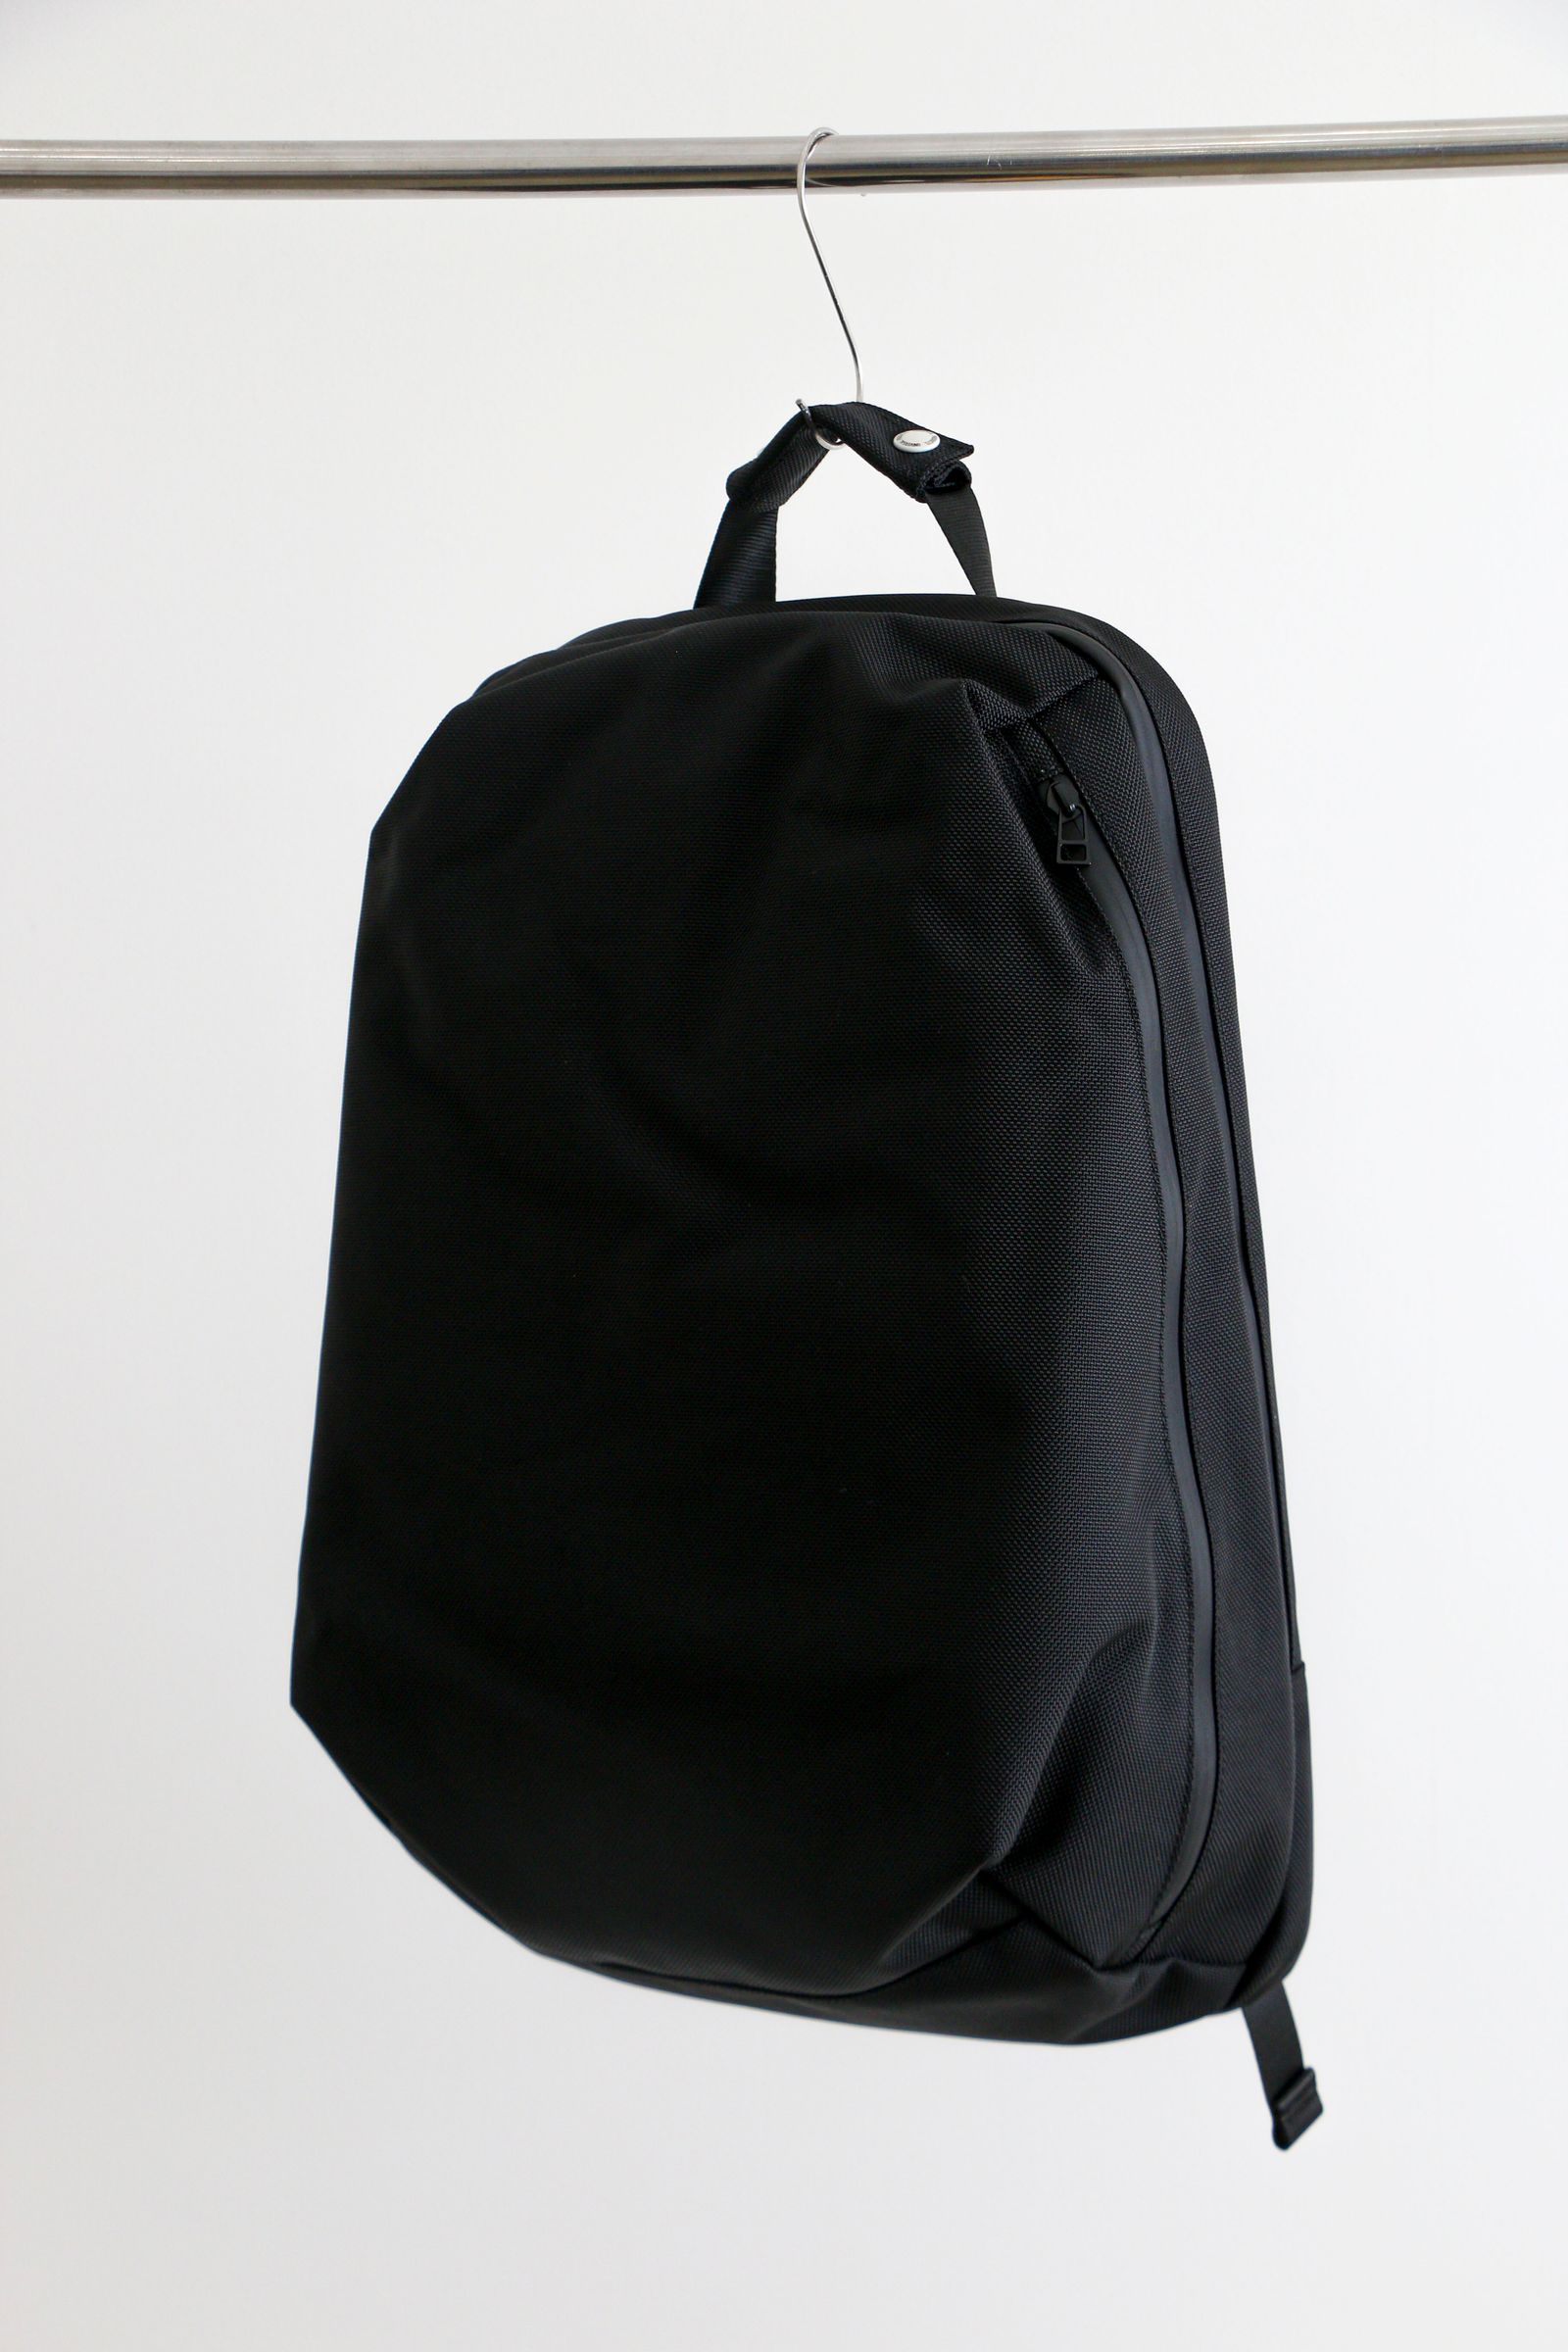 UNIVERSAL PRODUCTS - New Utility Bag BLACK | koko